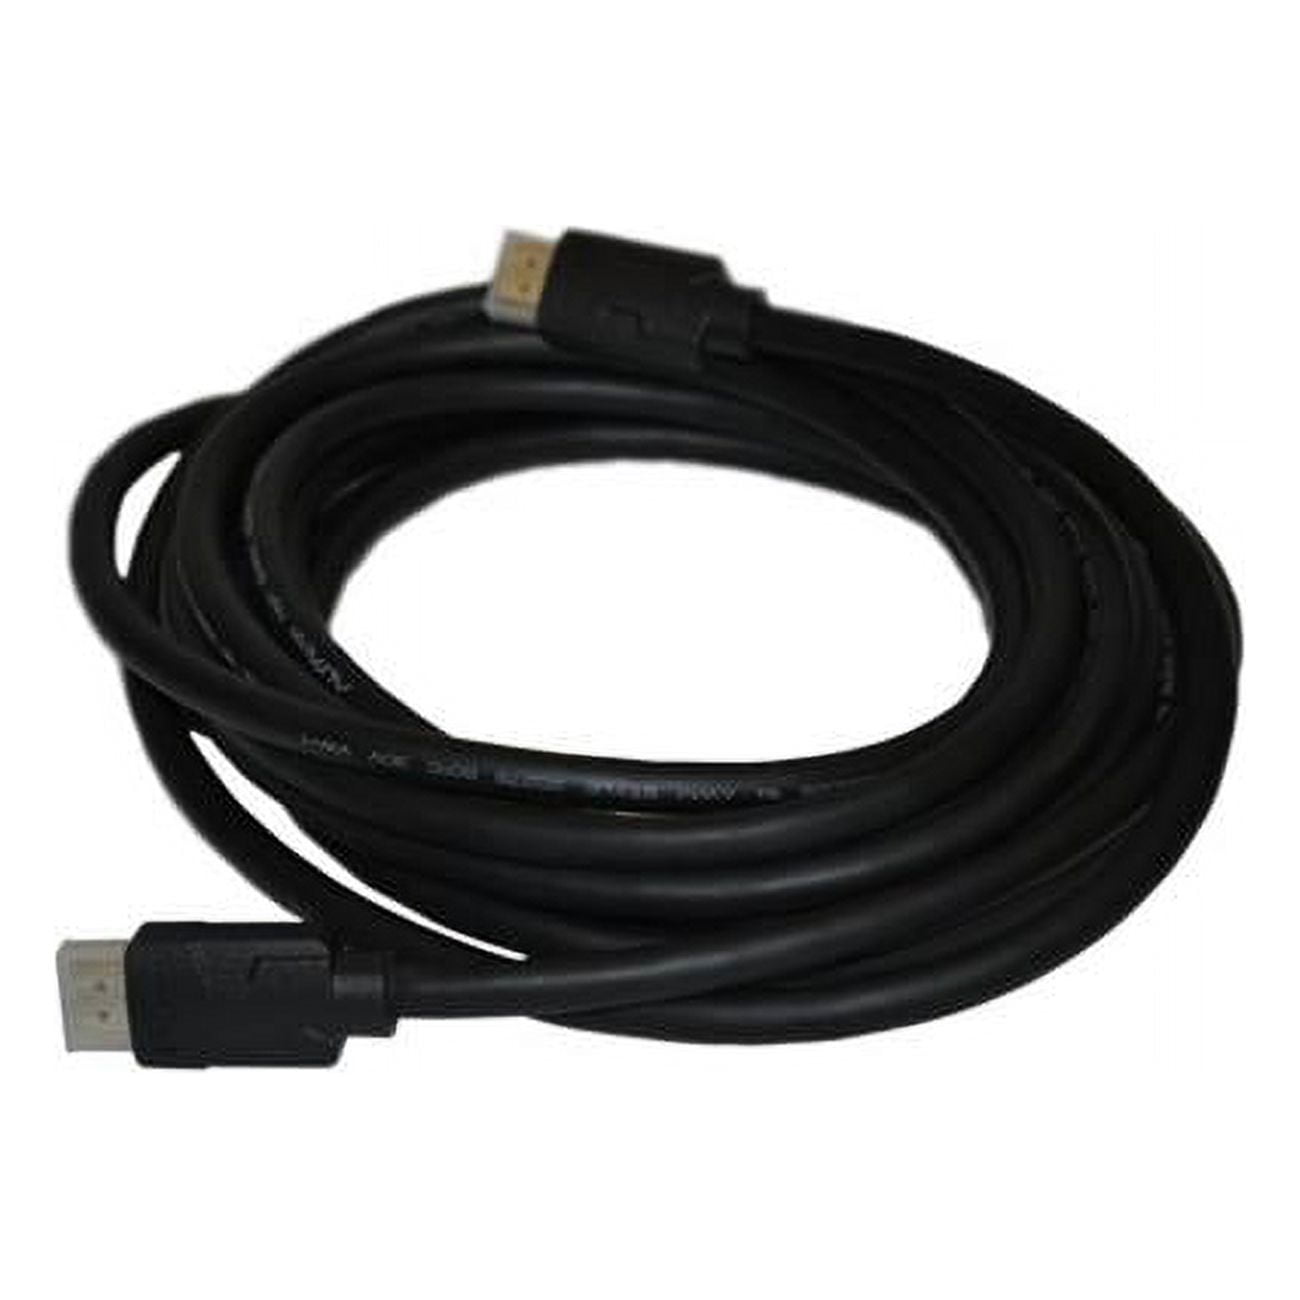 5 m HDMI Cable